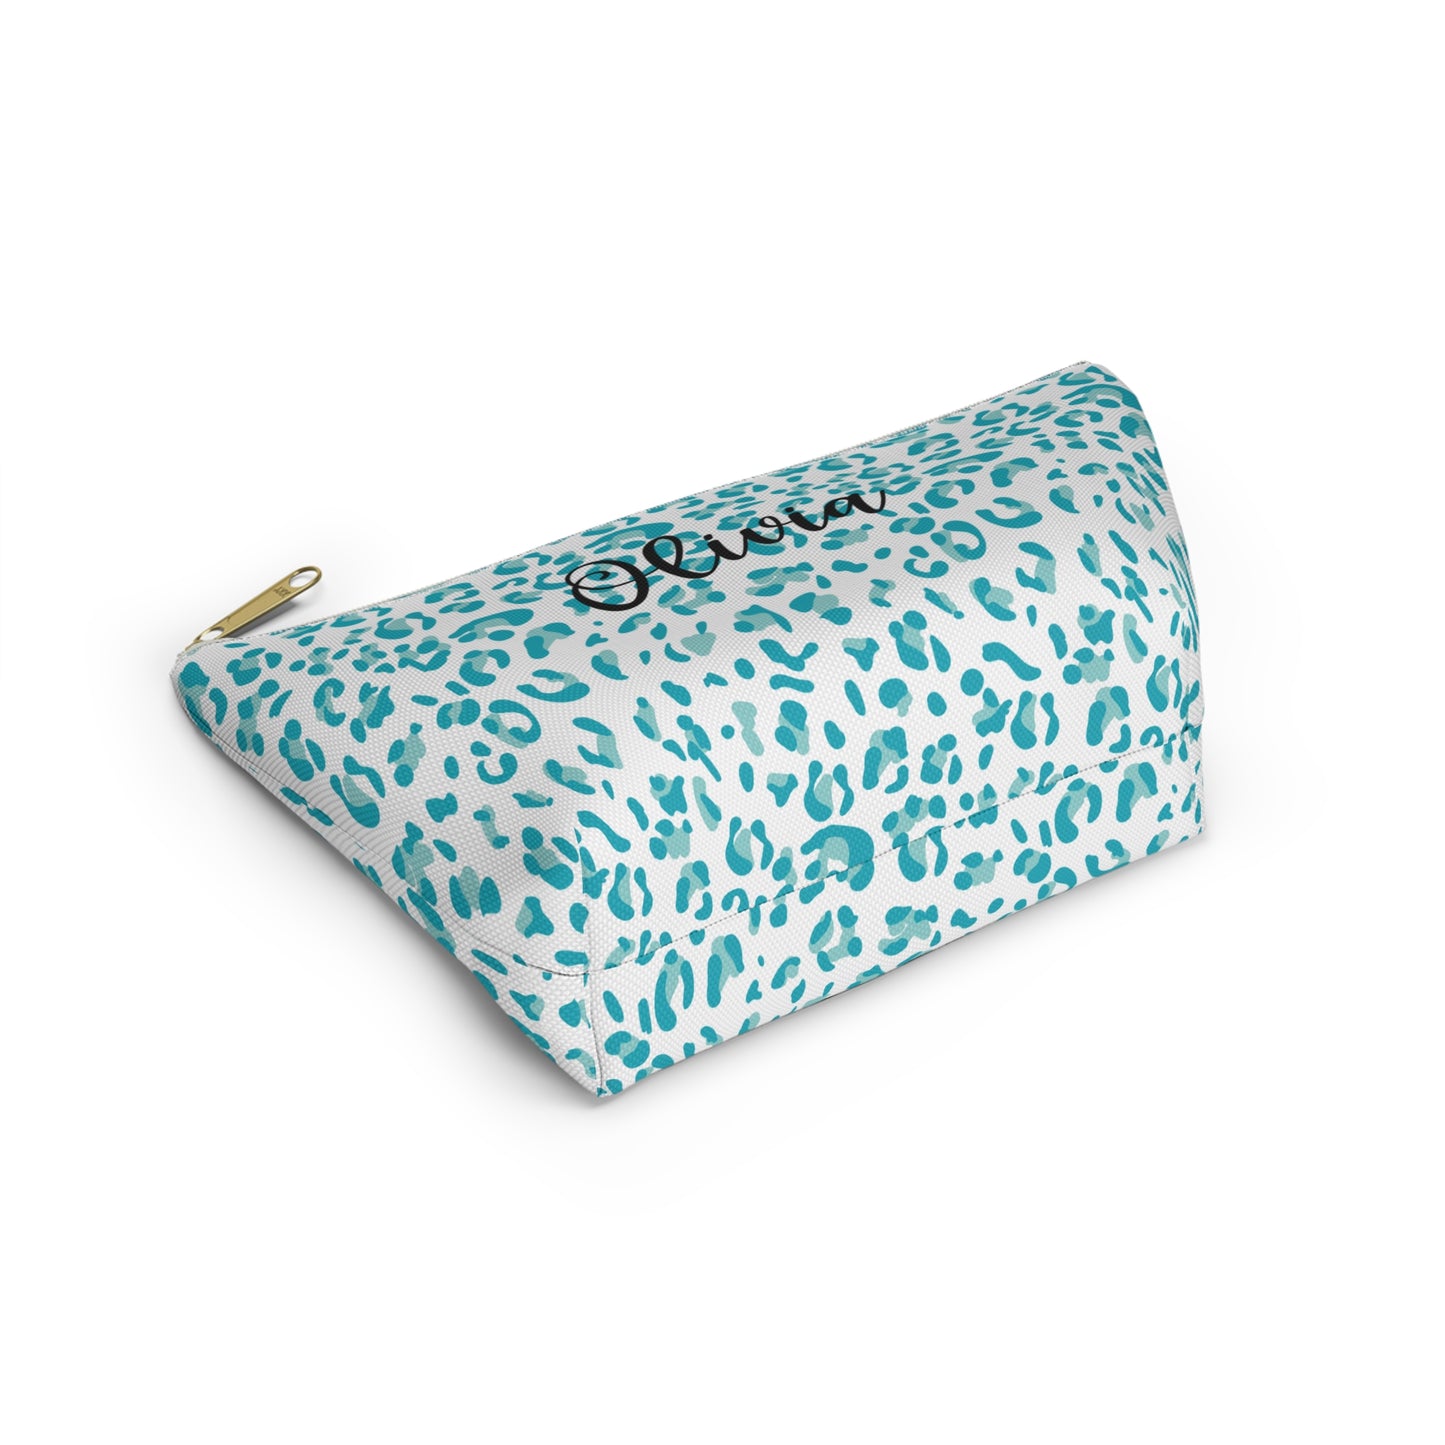 Leopard Print Pencil Case / Teal Leopard Print Makeup Bag